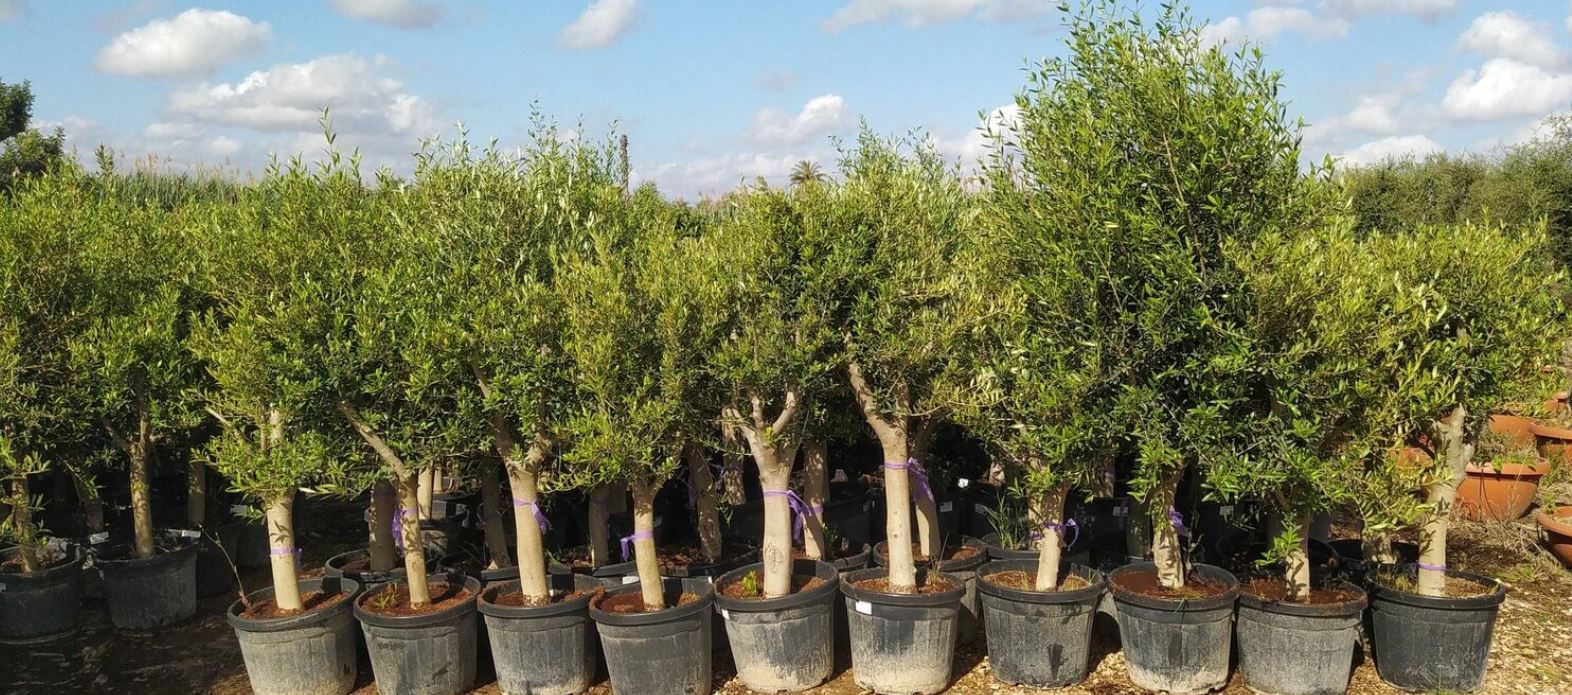 Olivenbaum 20 Jahre inkl. Topf 170 180cm für 134,90€ (statt 190€)